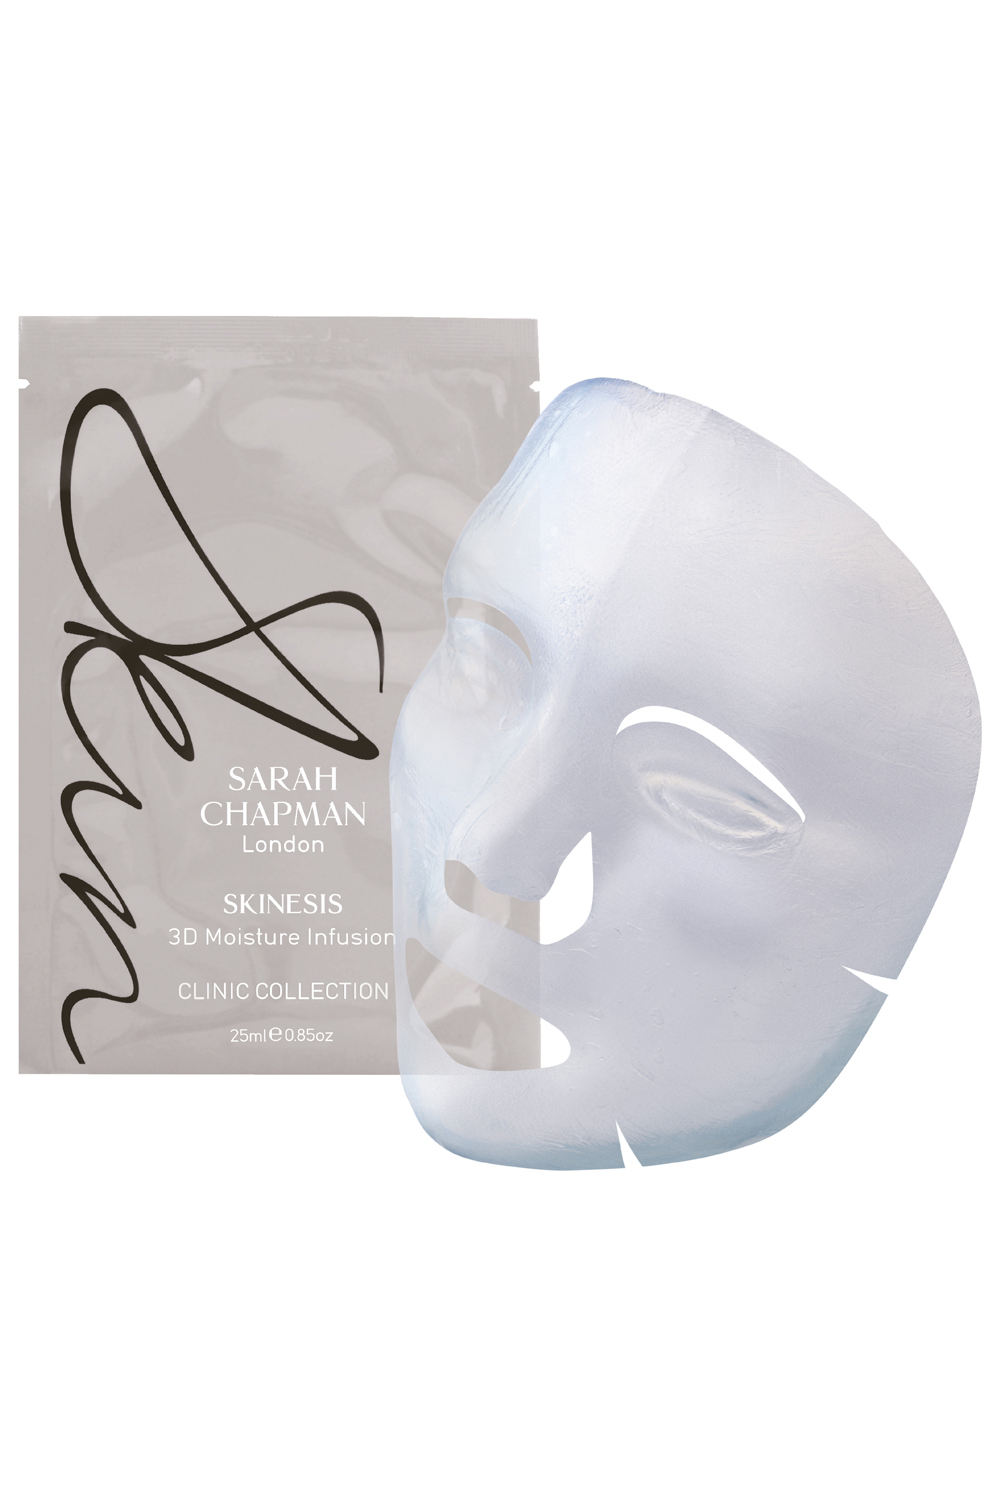 Sarah Chapman Skinesis 3D Moisture Infusion Mask, &pound;39 for 4